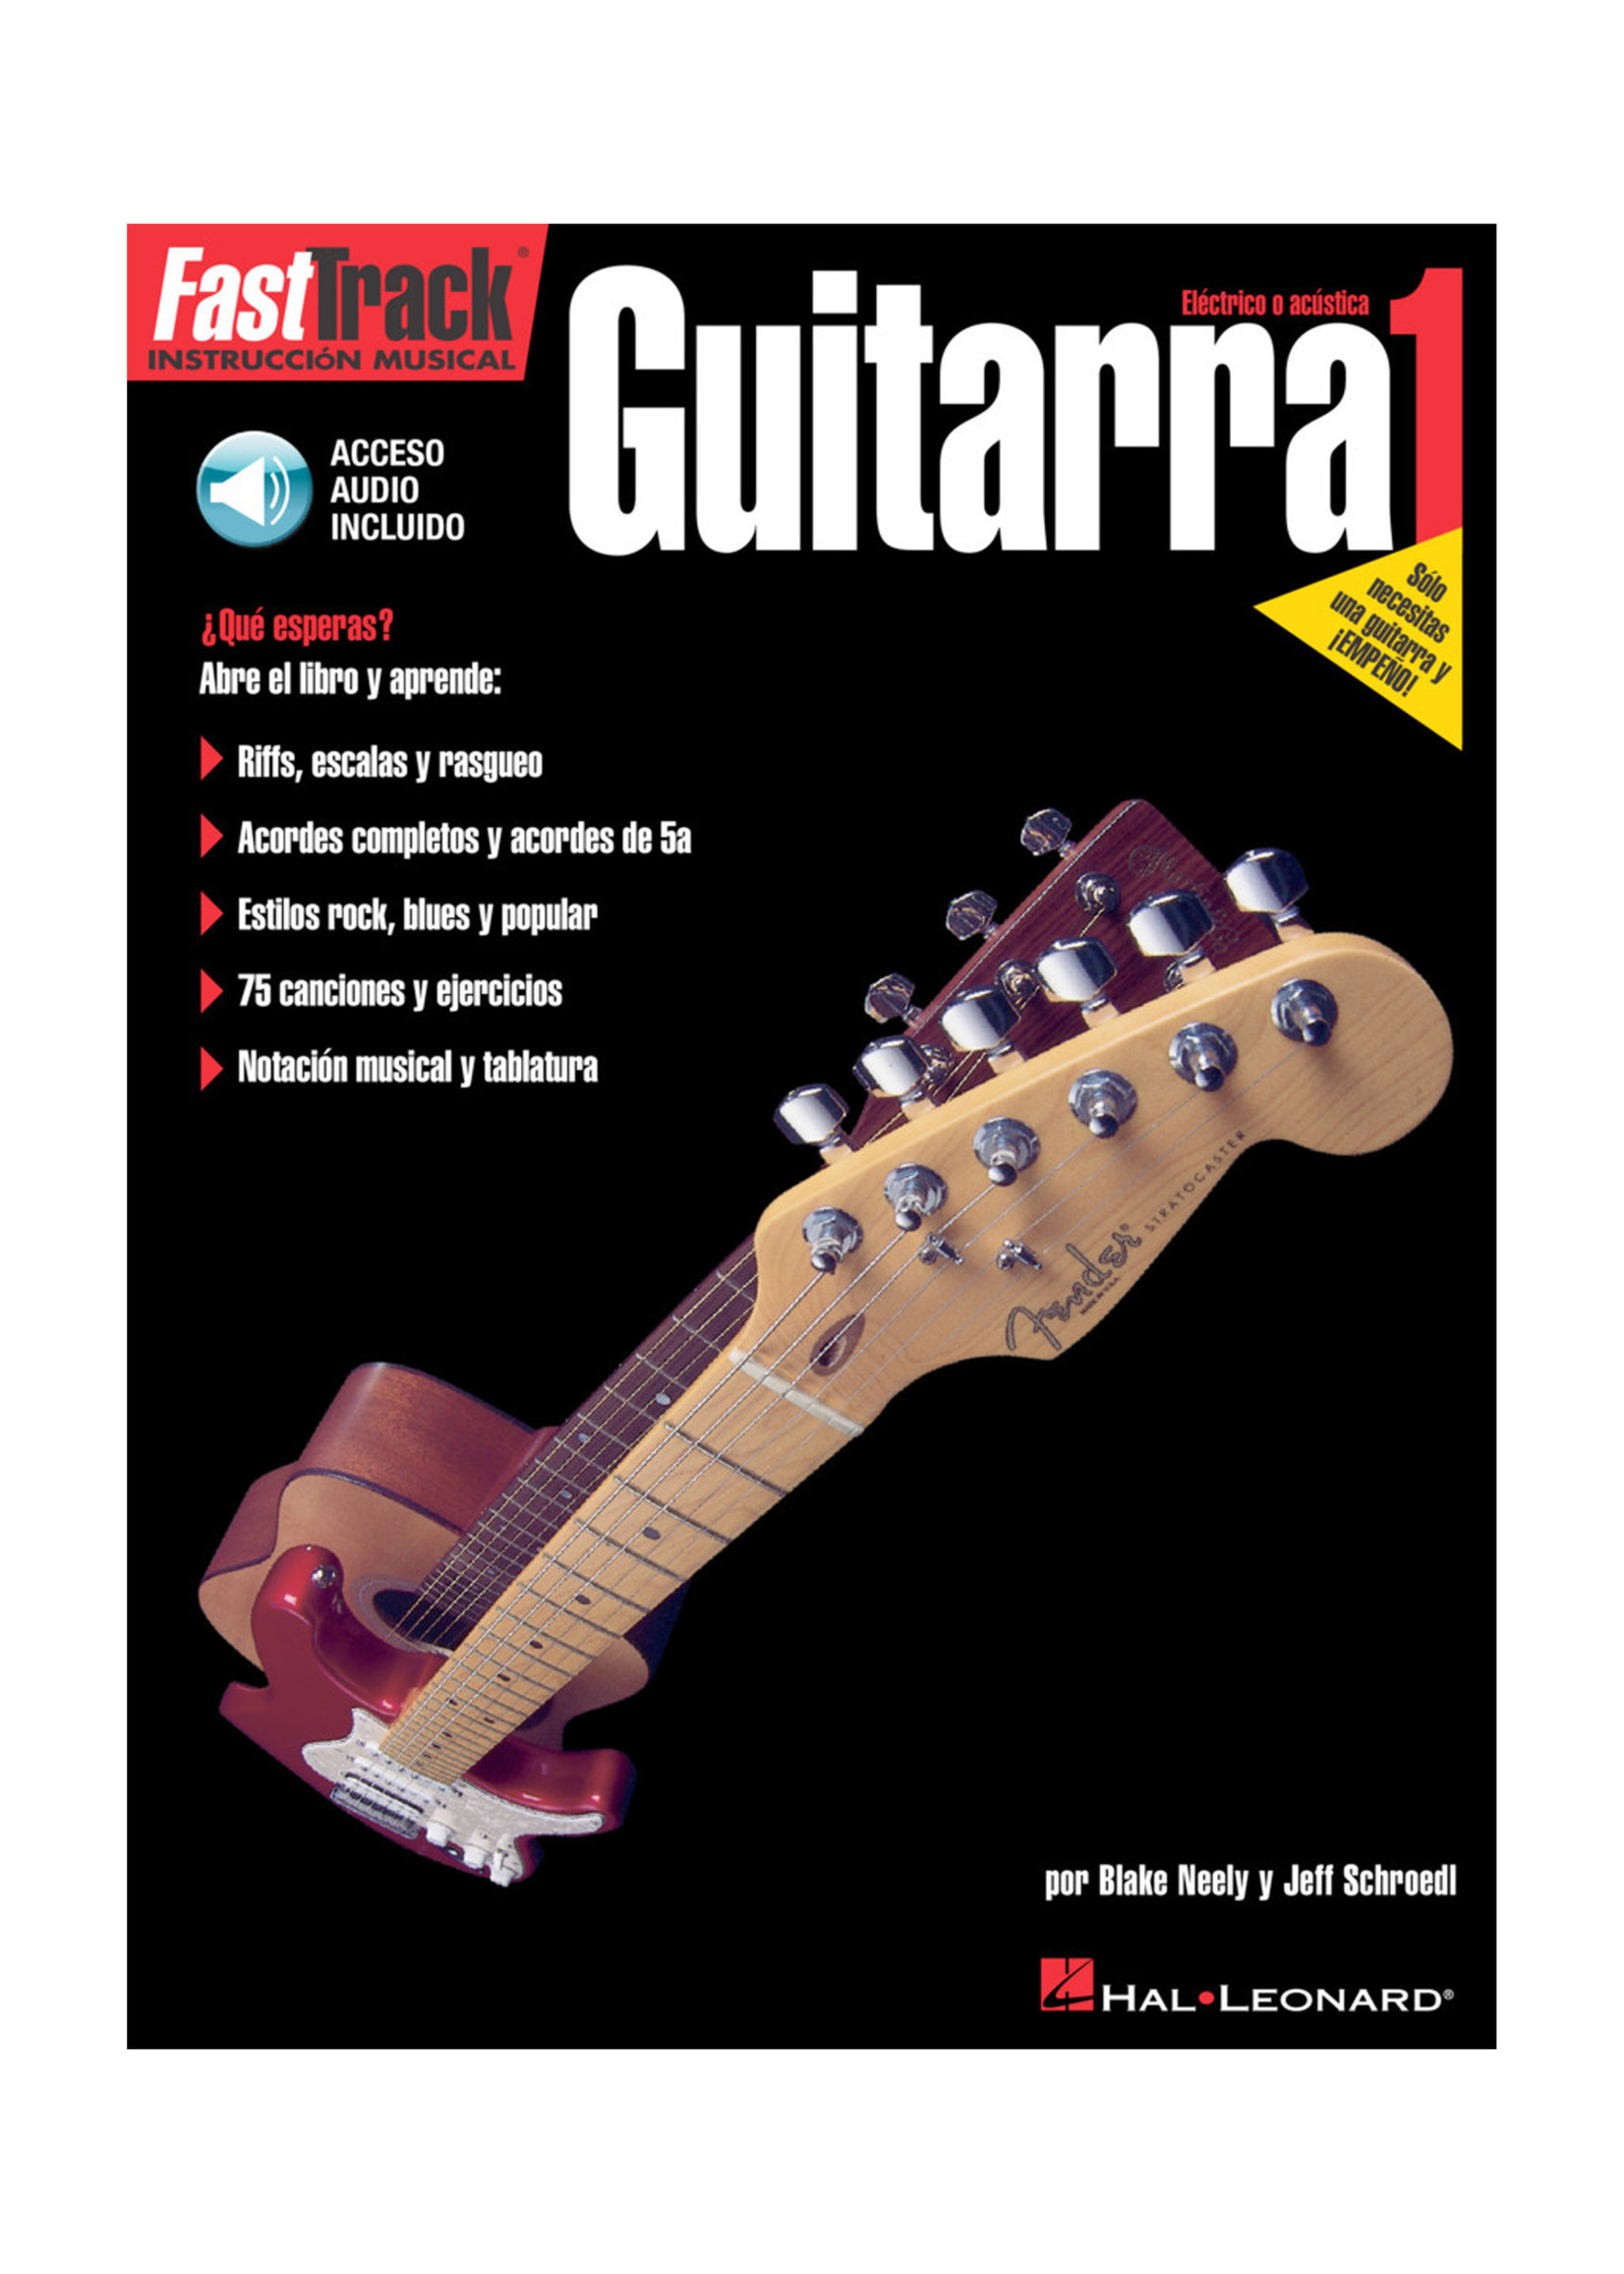 Hal Leonard FastTrack Guitar Method – Spanish Edition - Level 1